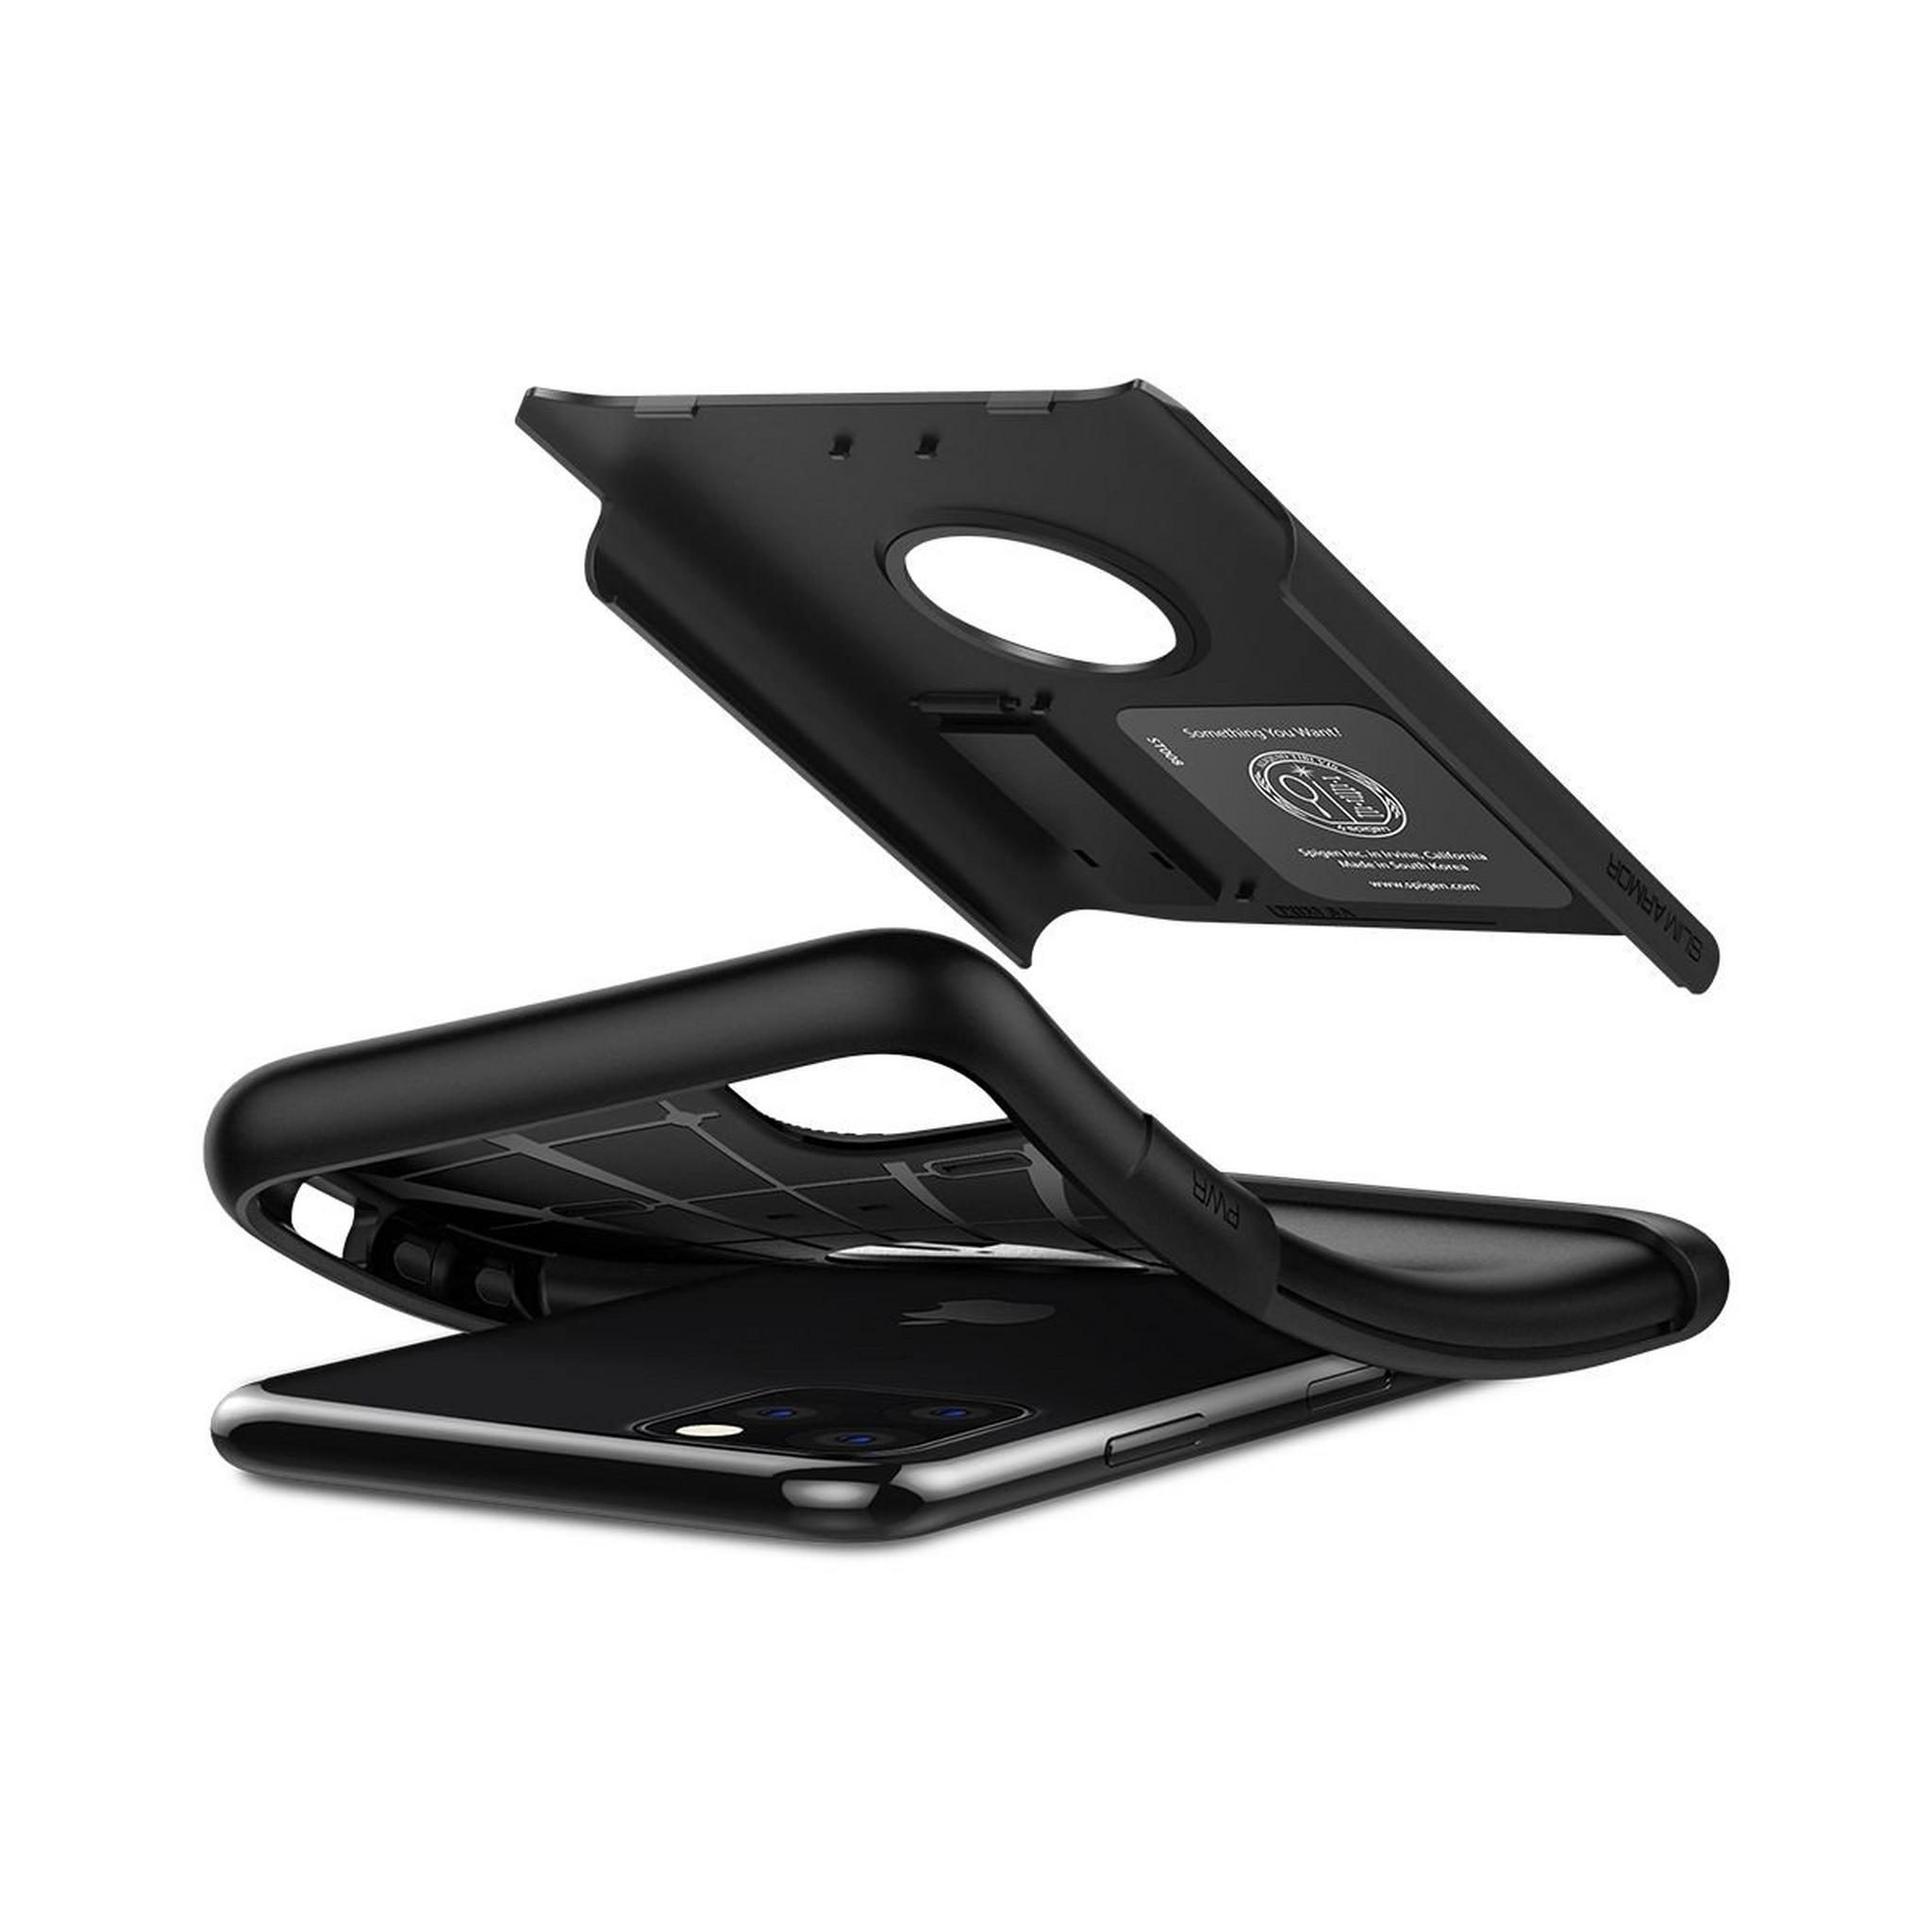 Spigen Slim Armor Case For iPhone 11 Pro (077CS27099) - Black